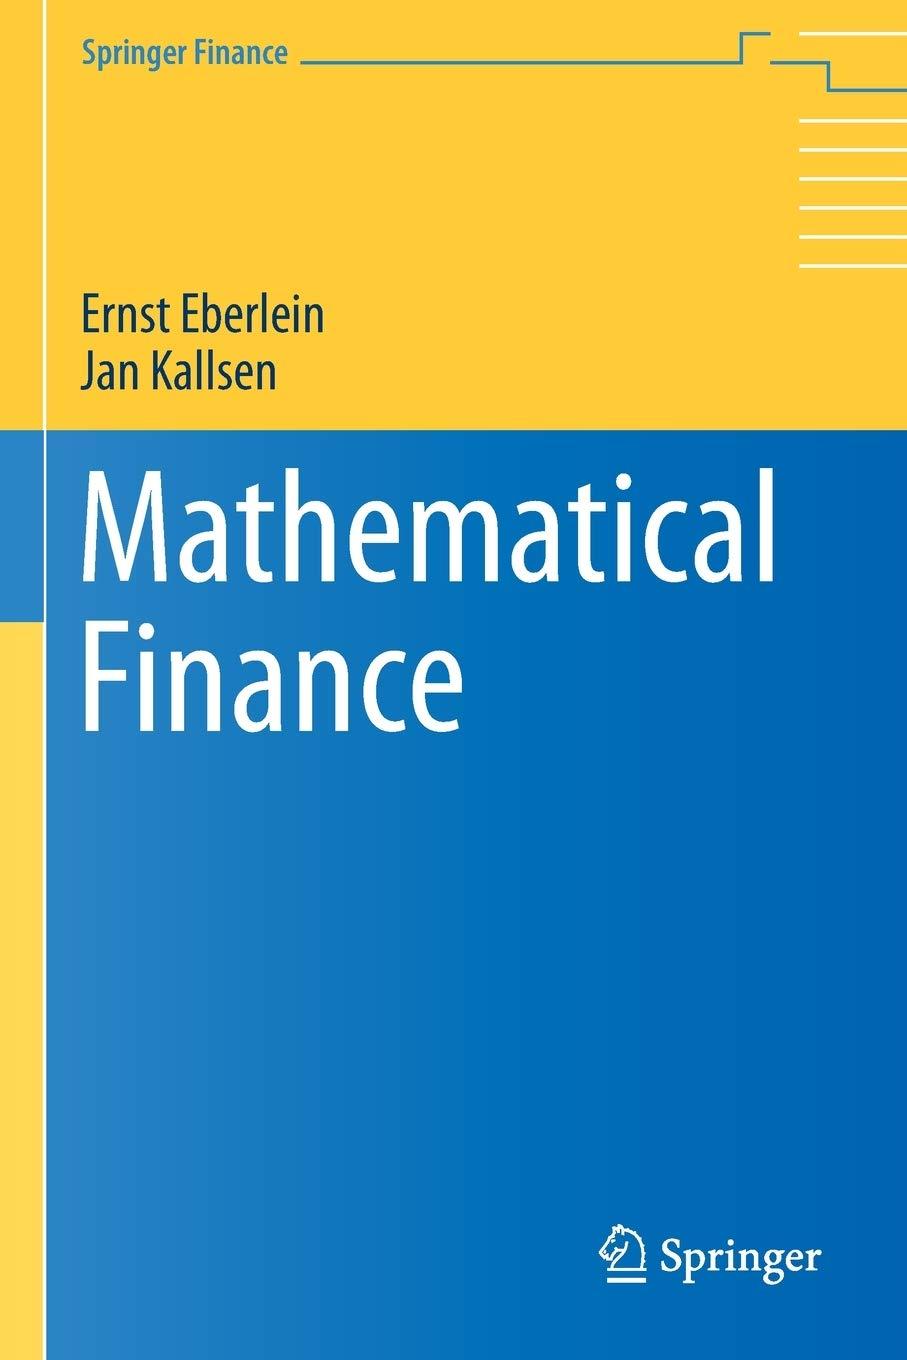 mathematical finance 1st edition ernst eberlein, jan kallsen 3030261085, 978-3030261085